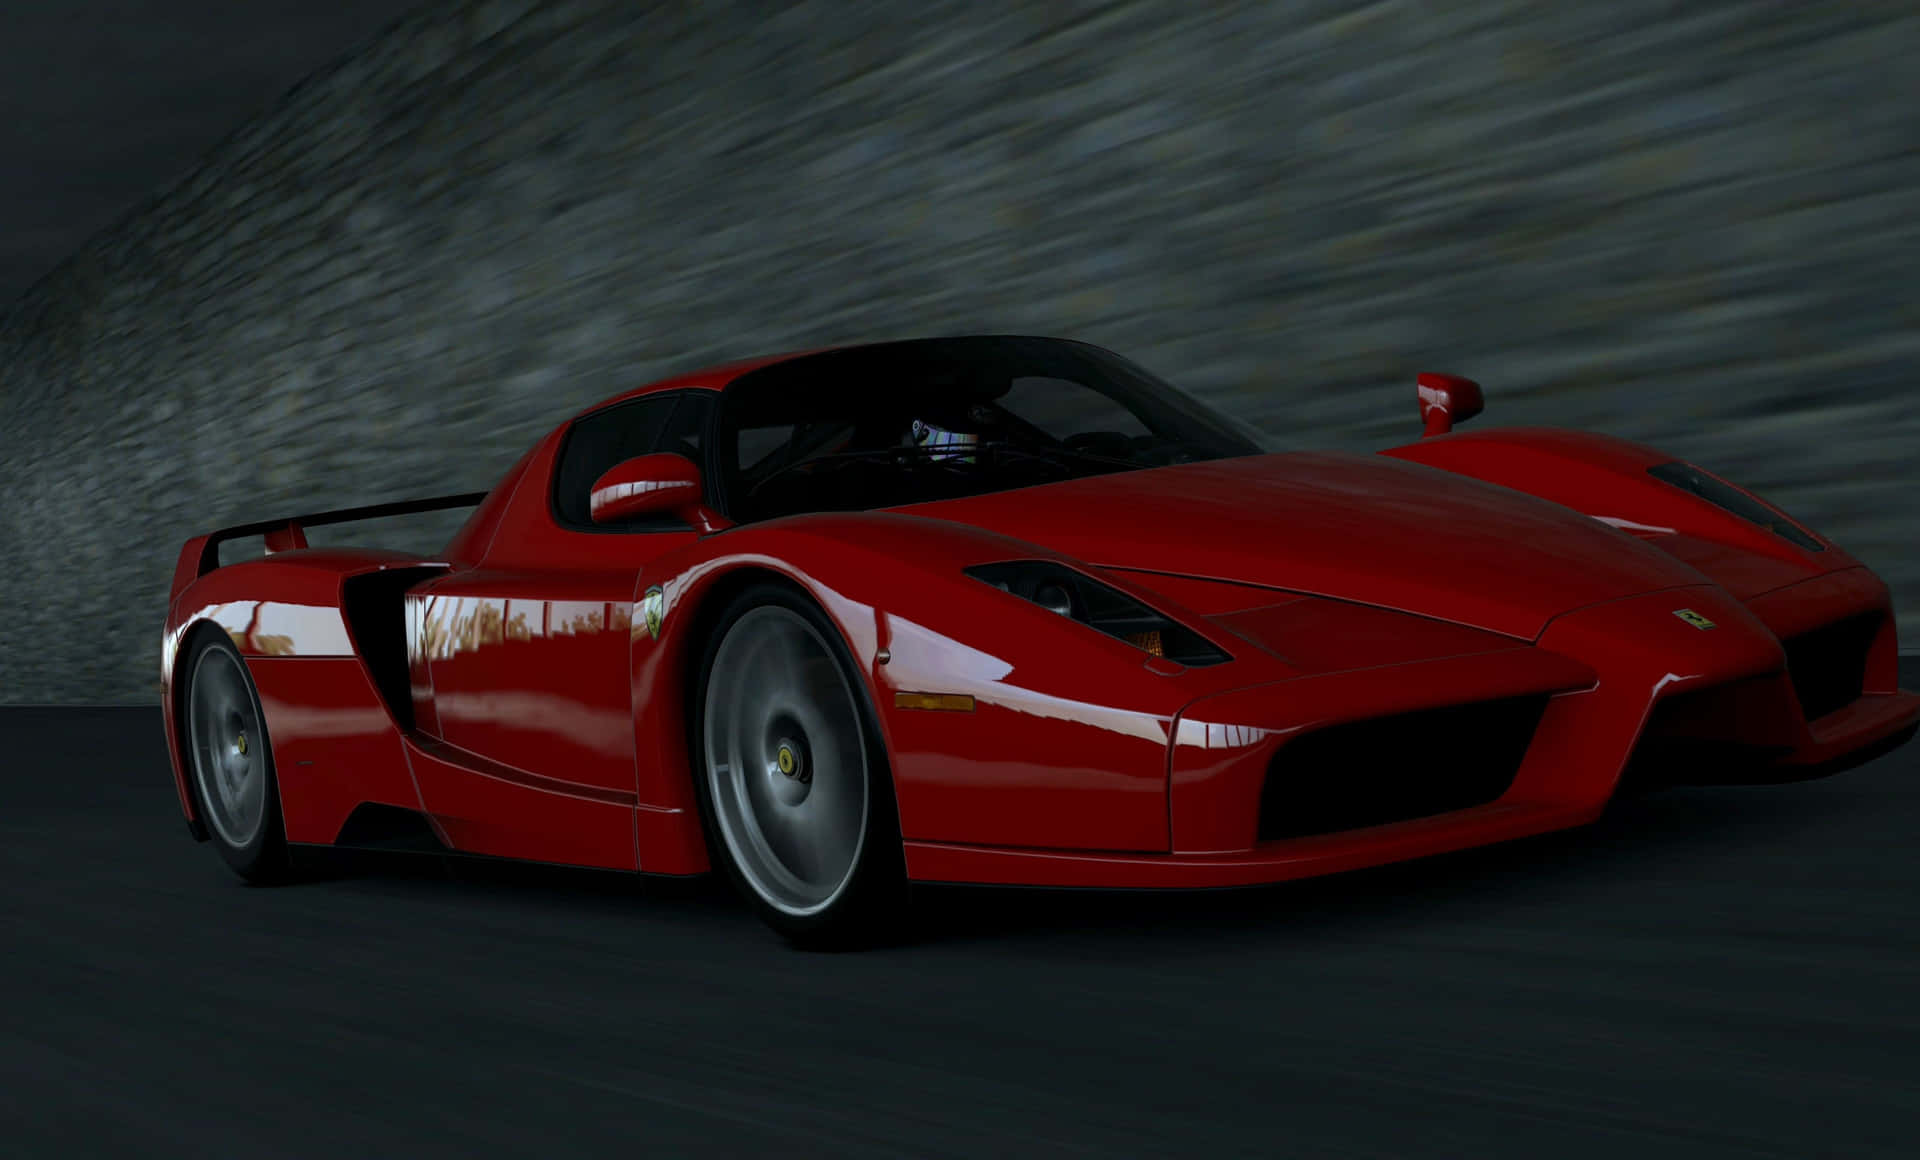 Stunning Red Ferrari Enzo in HD Wallpaper